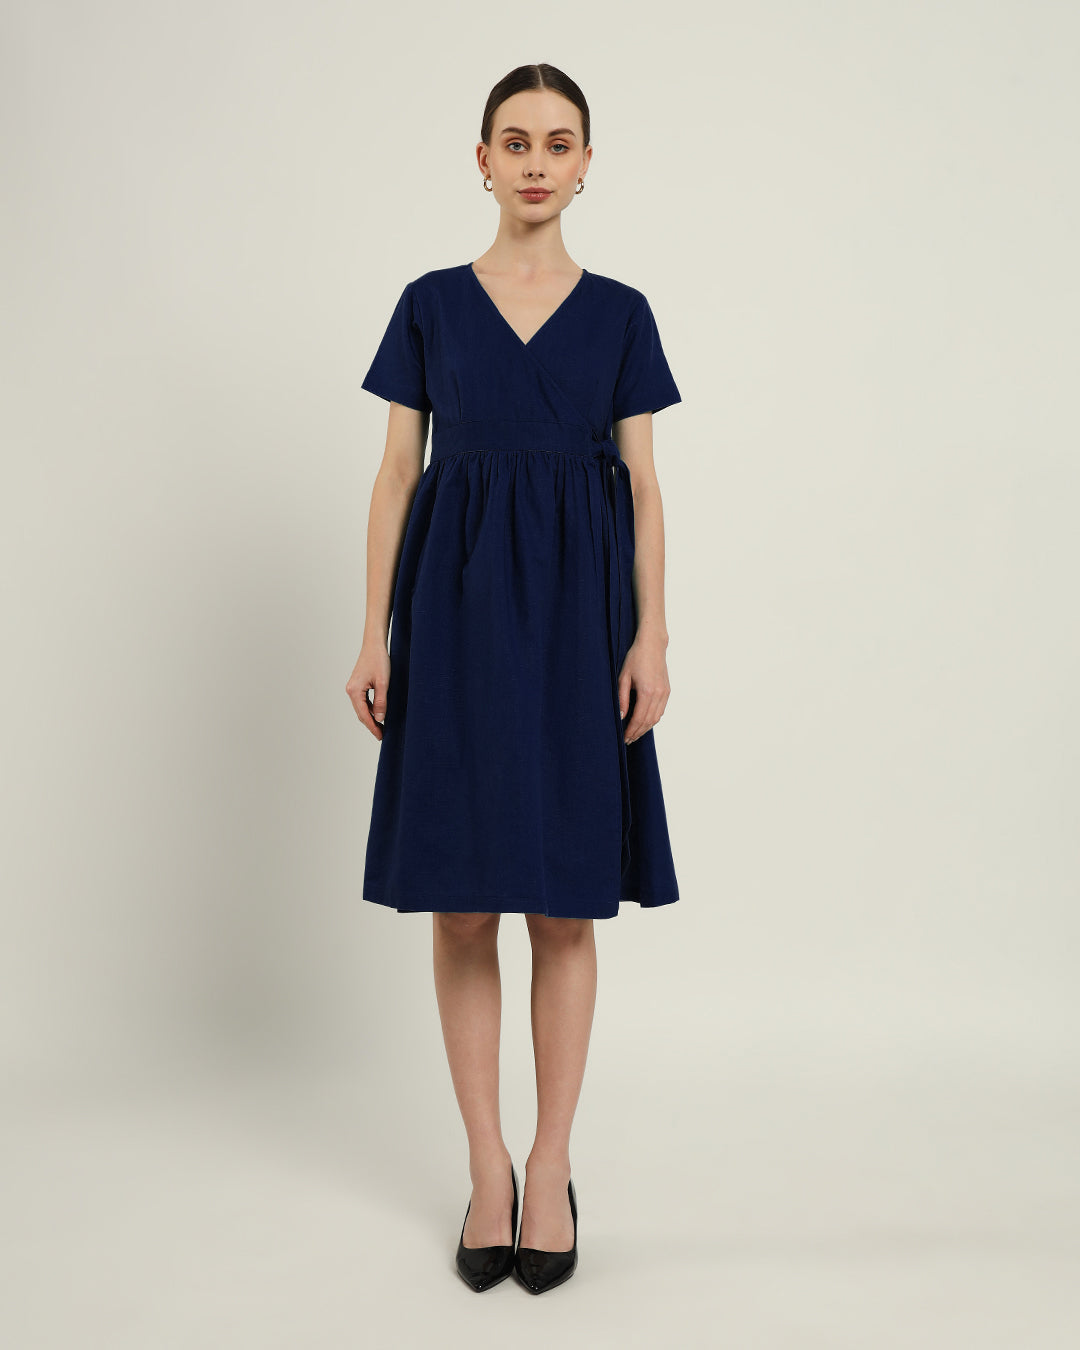 The Miyoshi Daisy Midnight Blue Linen Dress